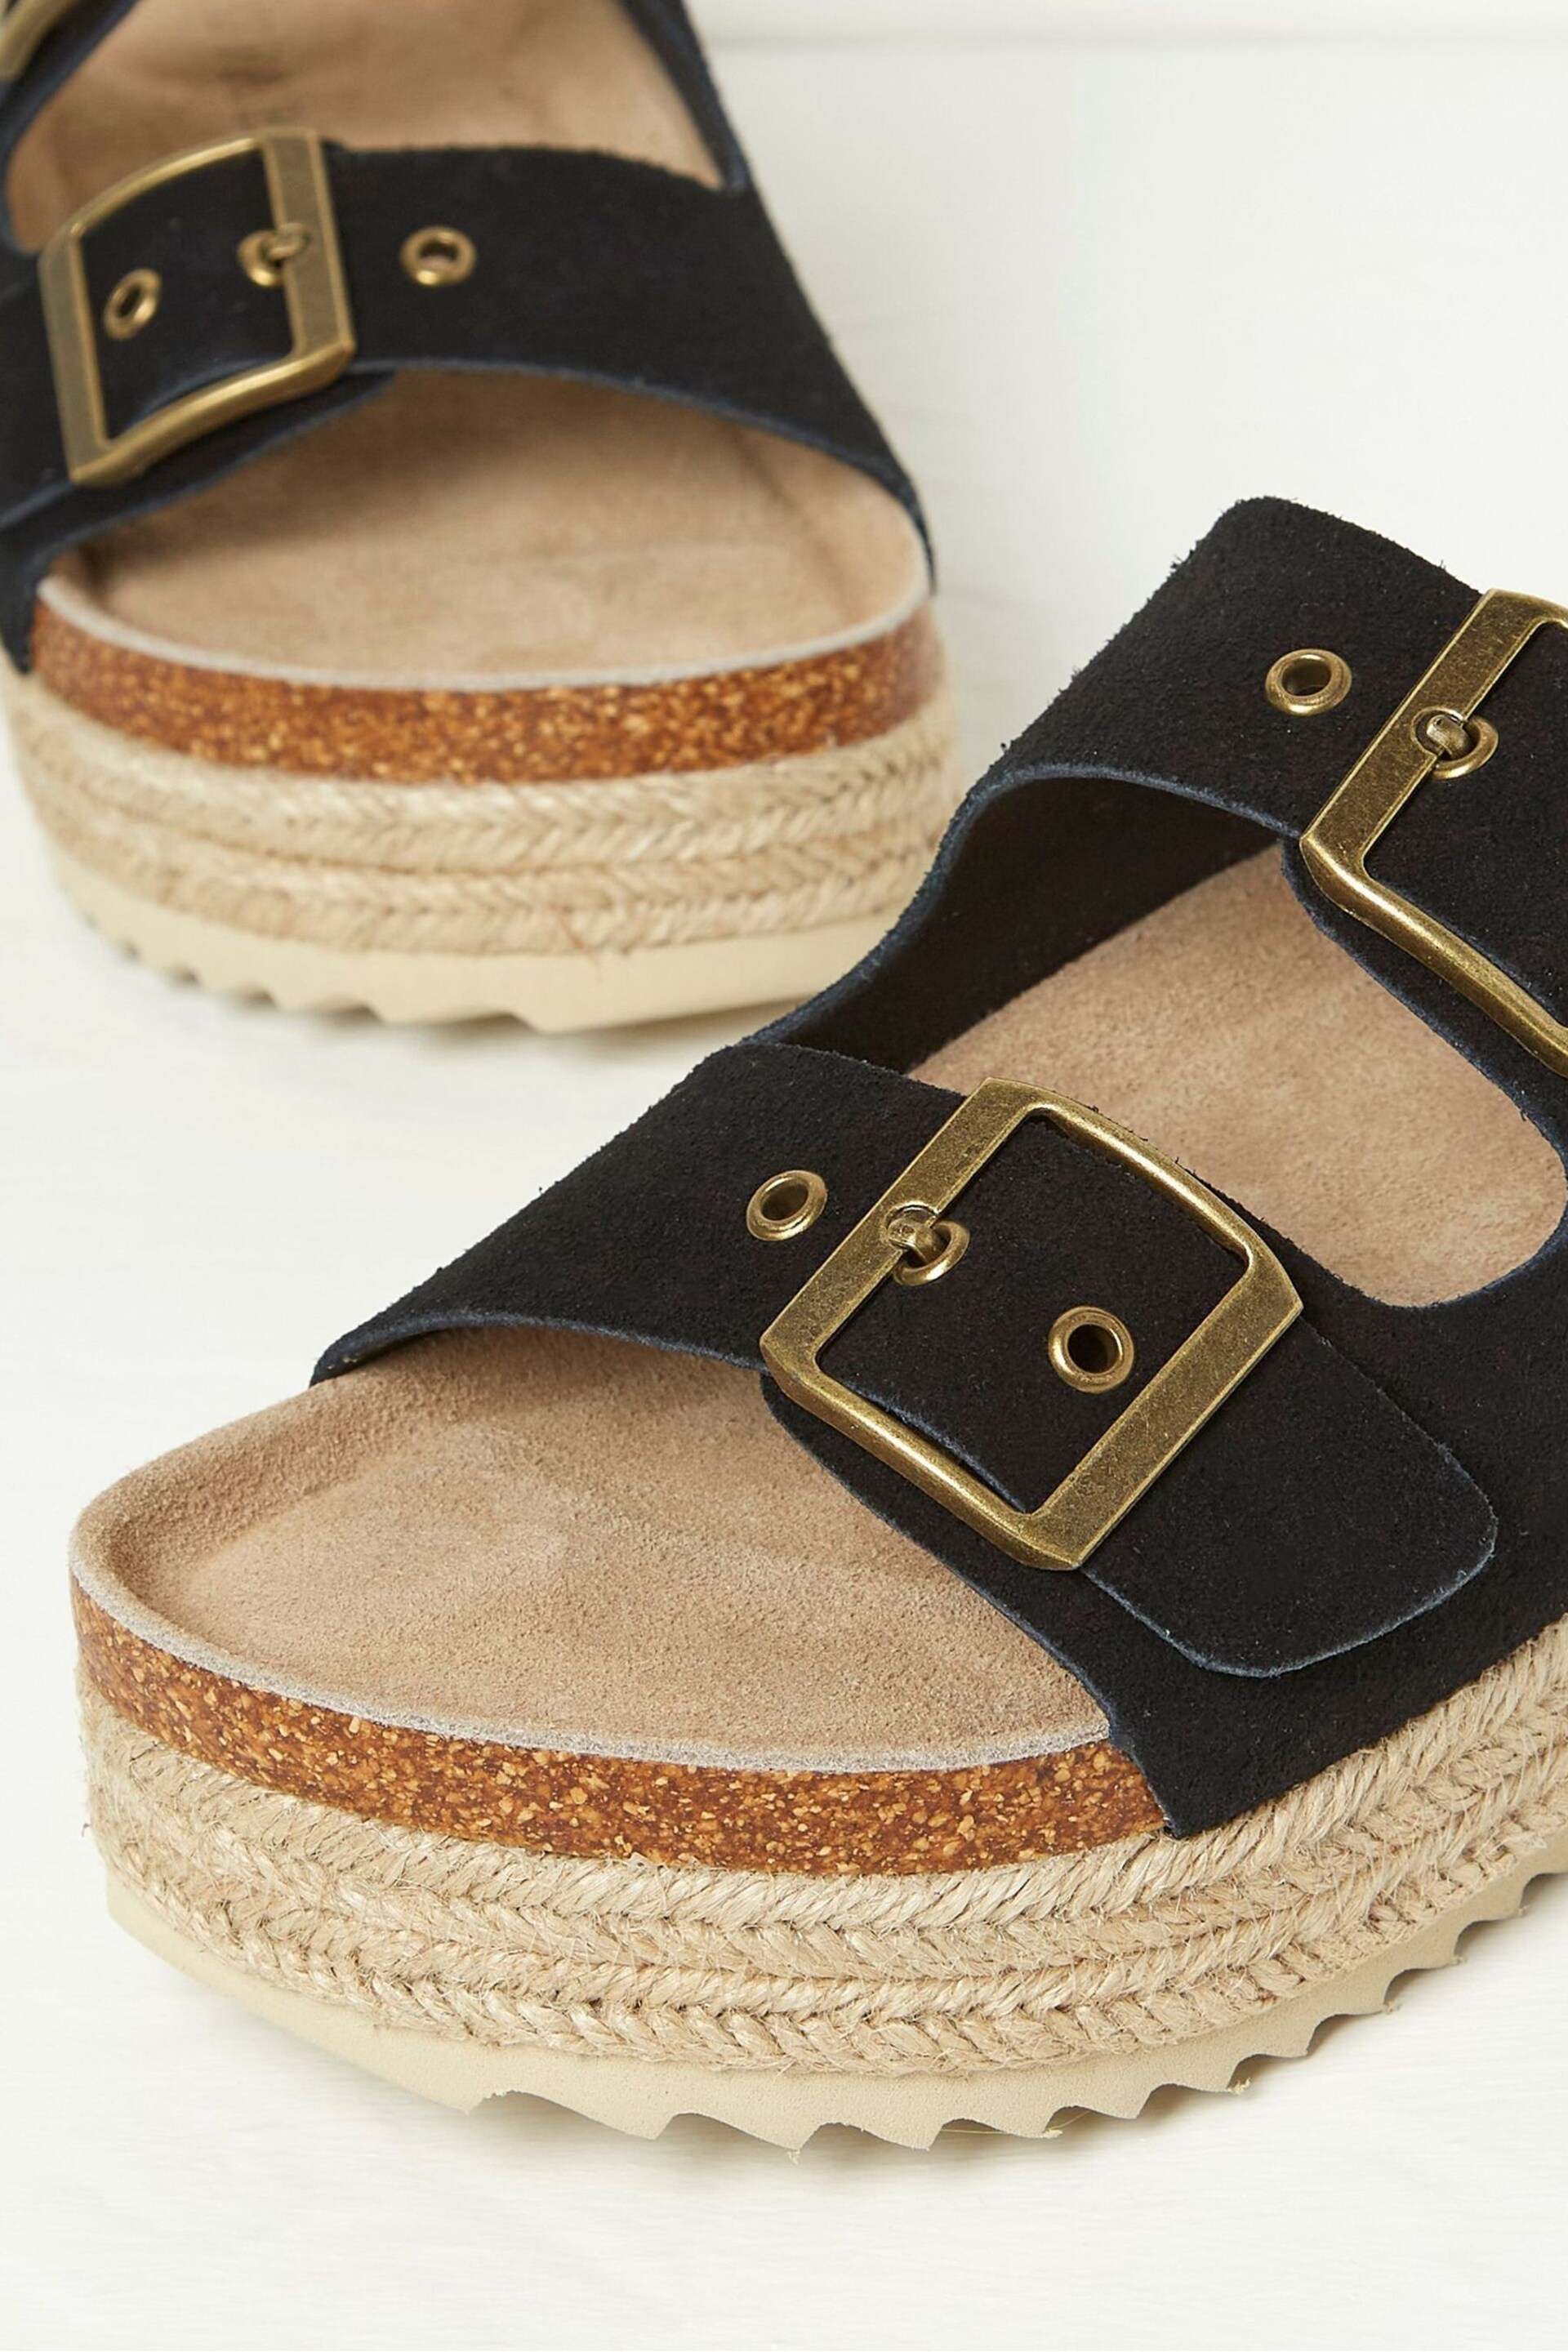 FatFace Black Meldon Flatform Sandals - Image 3 of 3